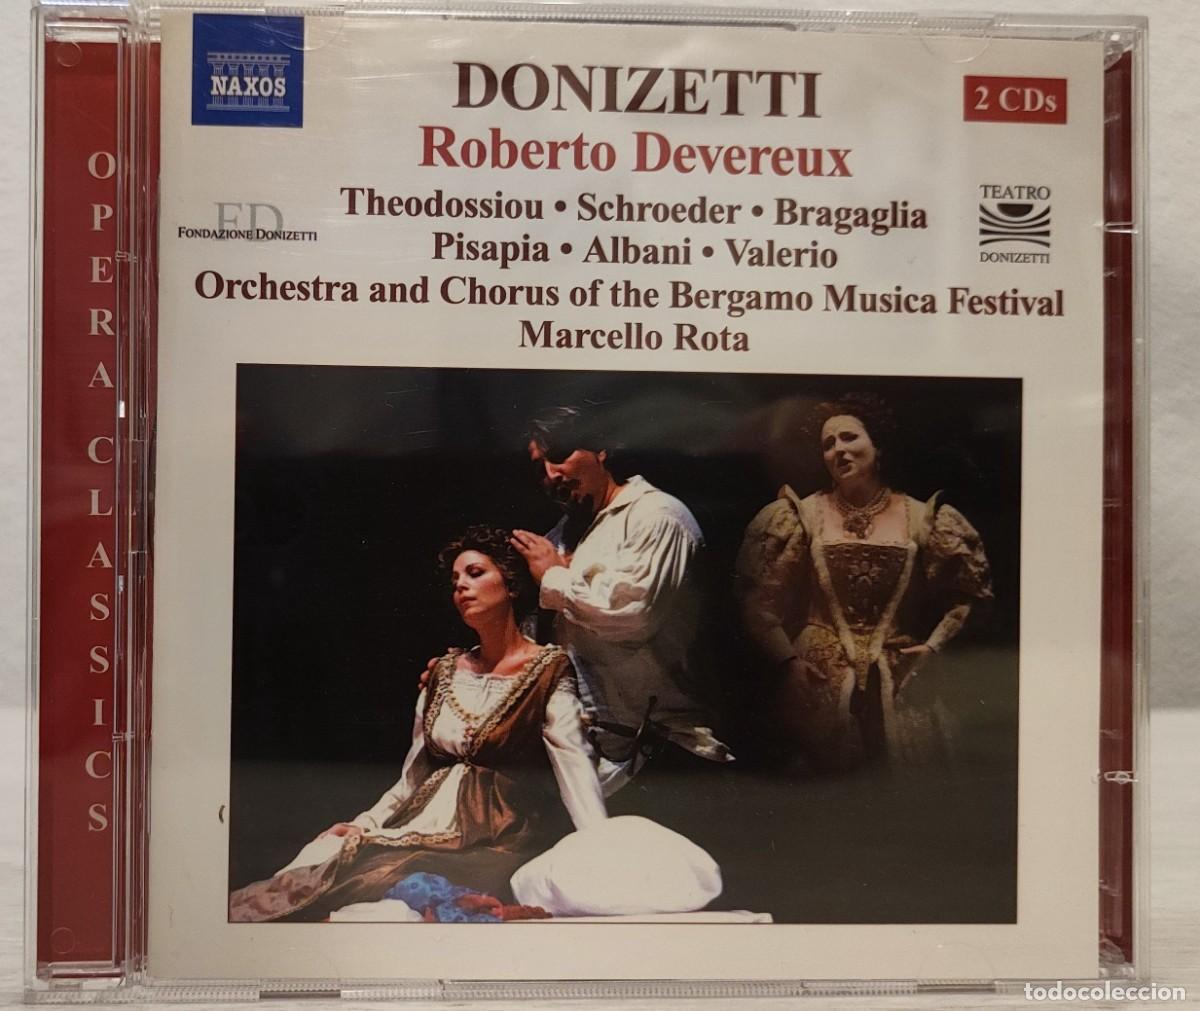 donizetti - roberto devereux (naxos